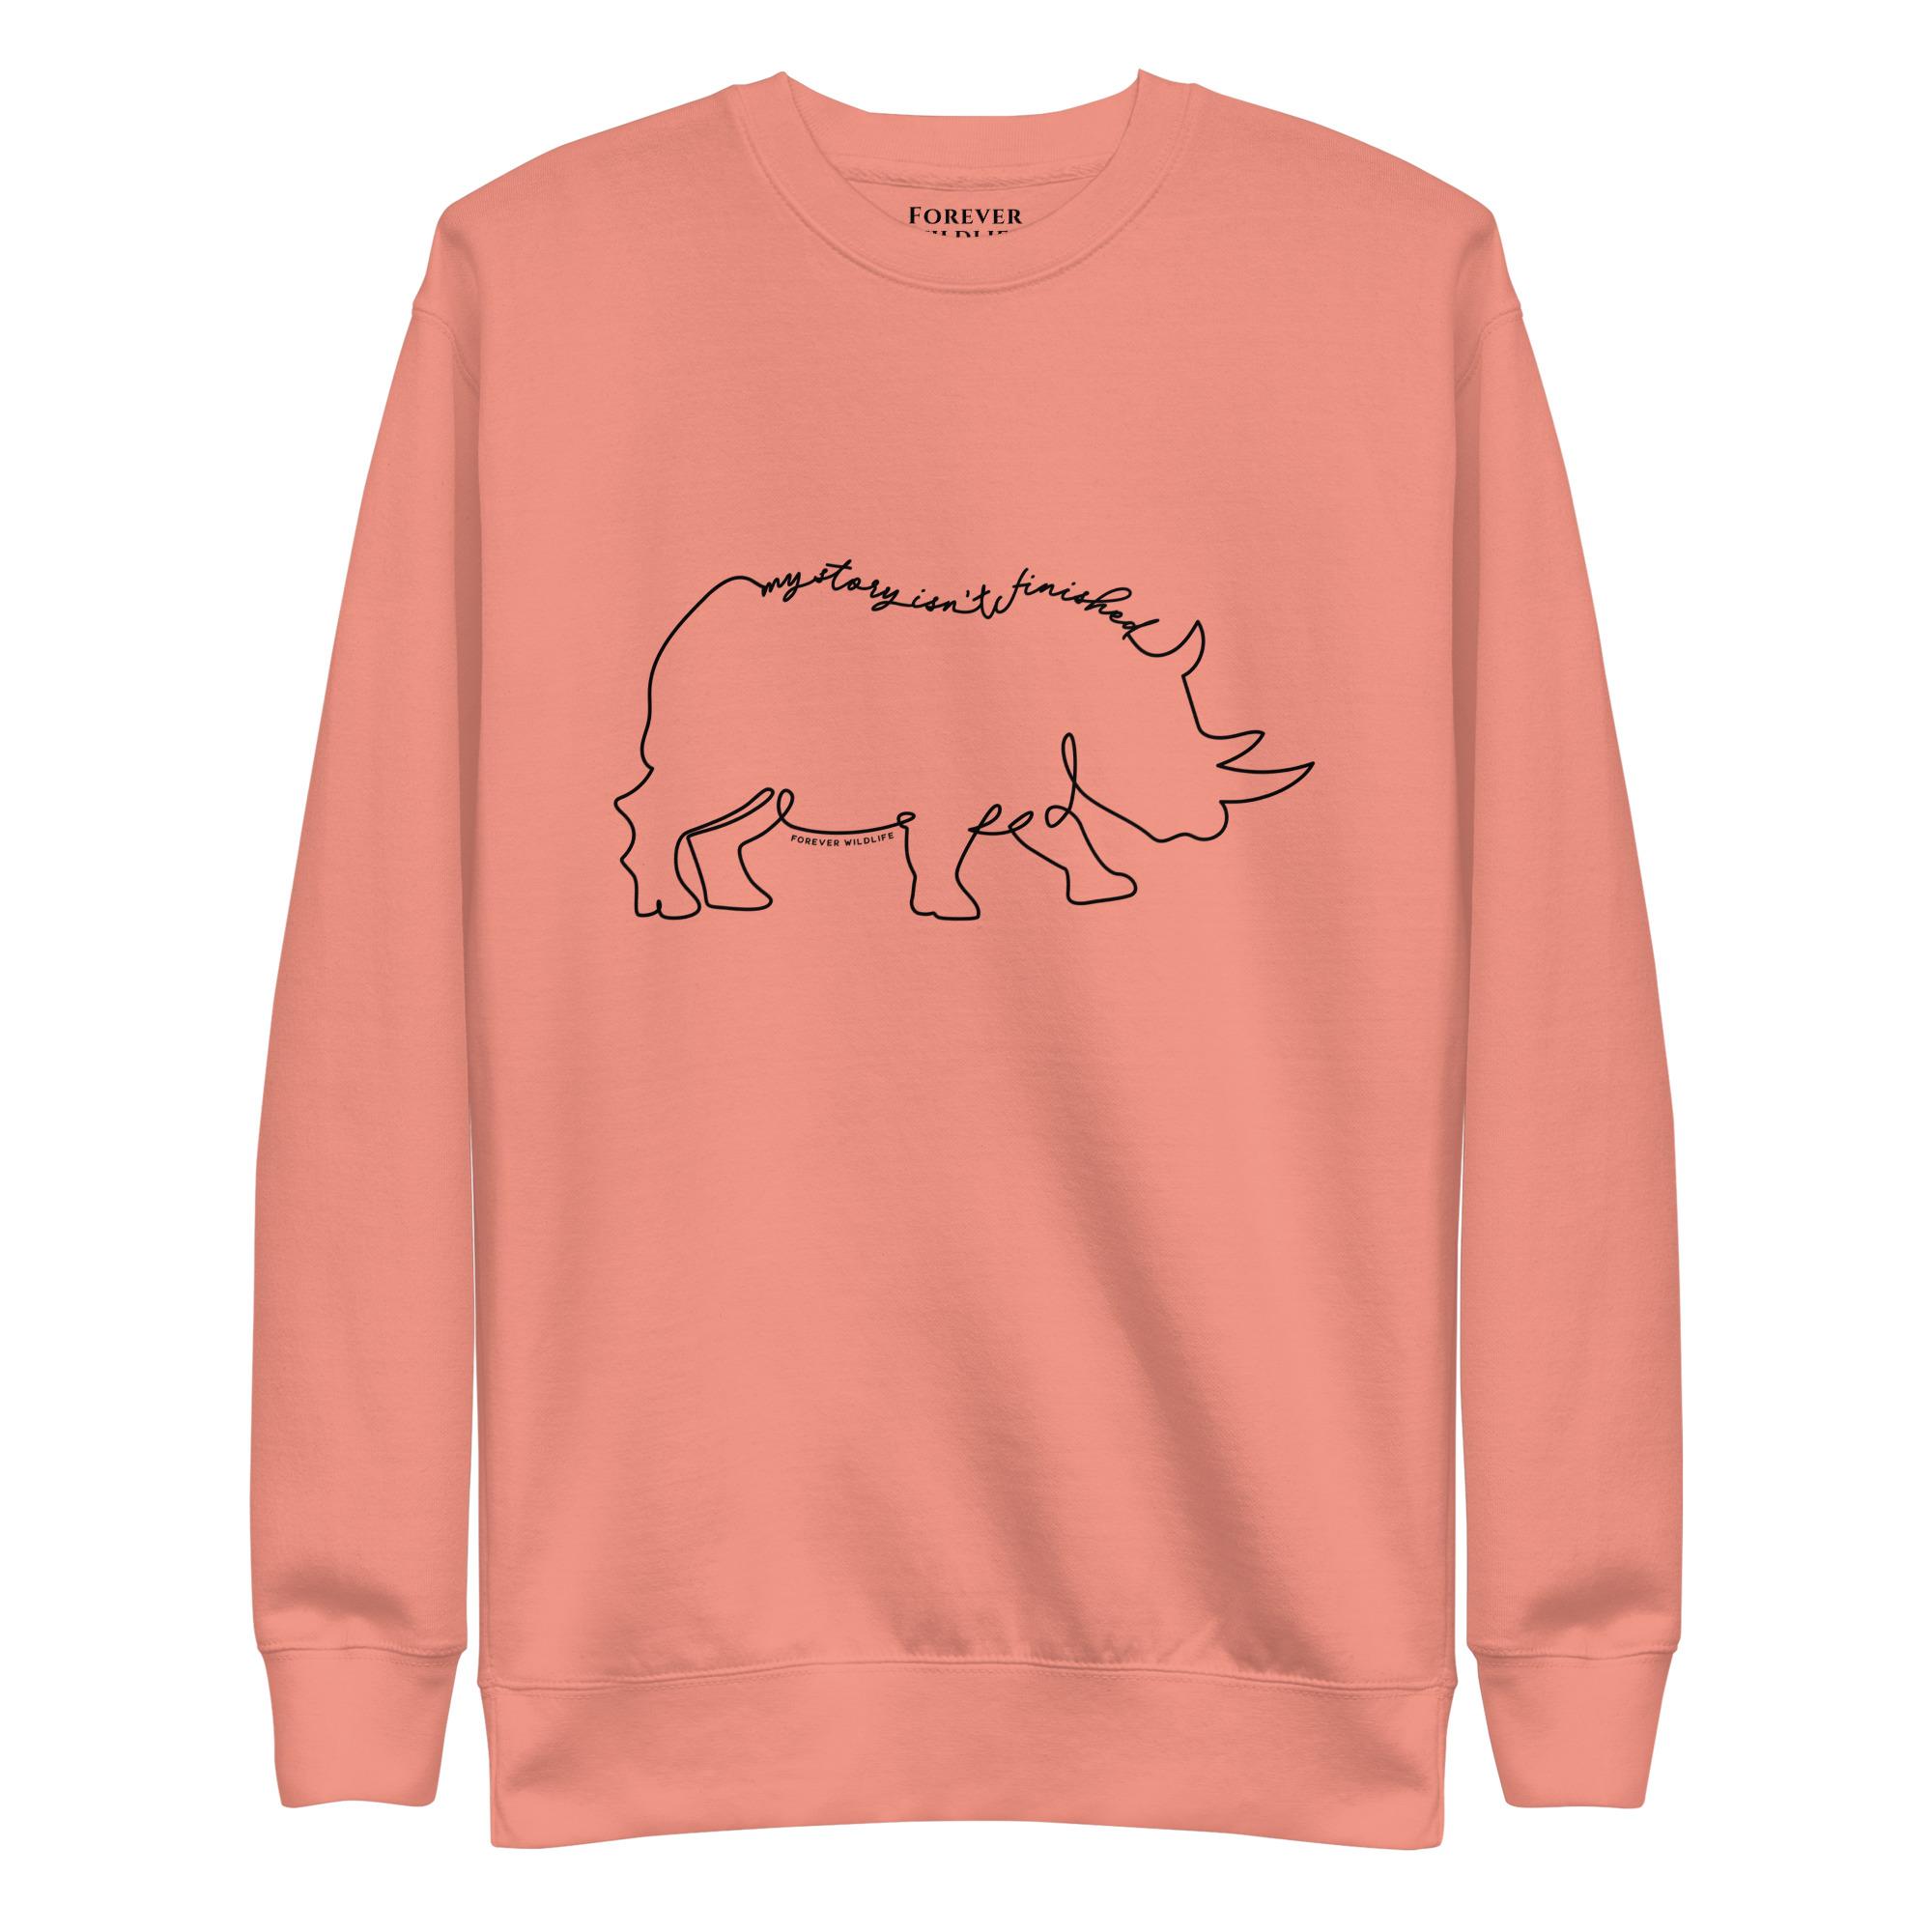 Rhino Sweatshirt in Rose-Premium Wildlife Animal Inspiration Sweatshirt Design with 'My Story Isn't Finished' text, part of Wildlife Sweatshirts & Clothing from Forever Wildlife.